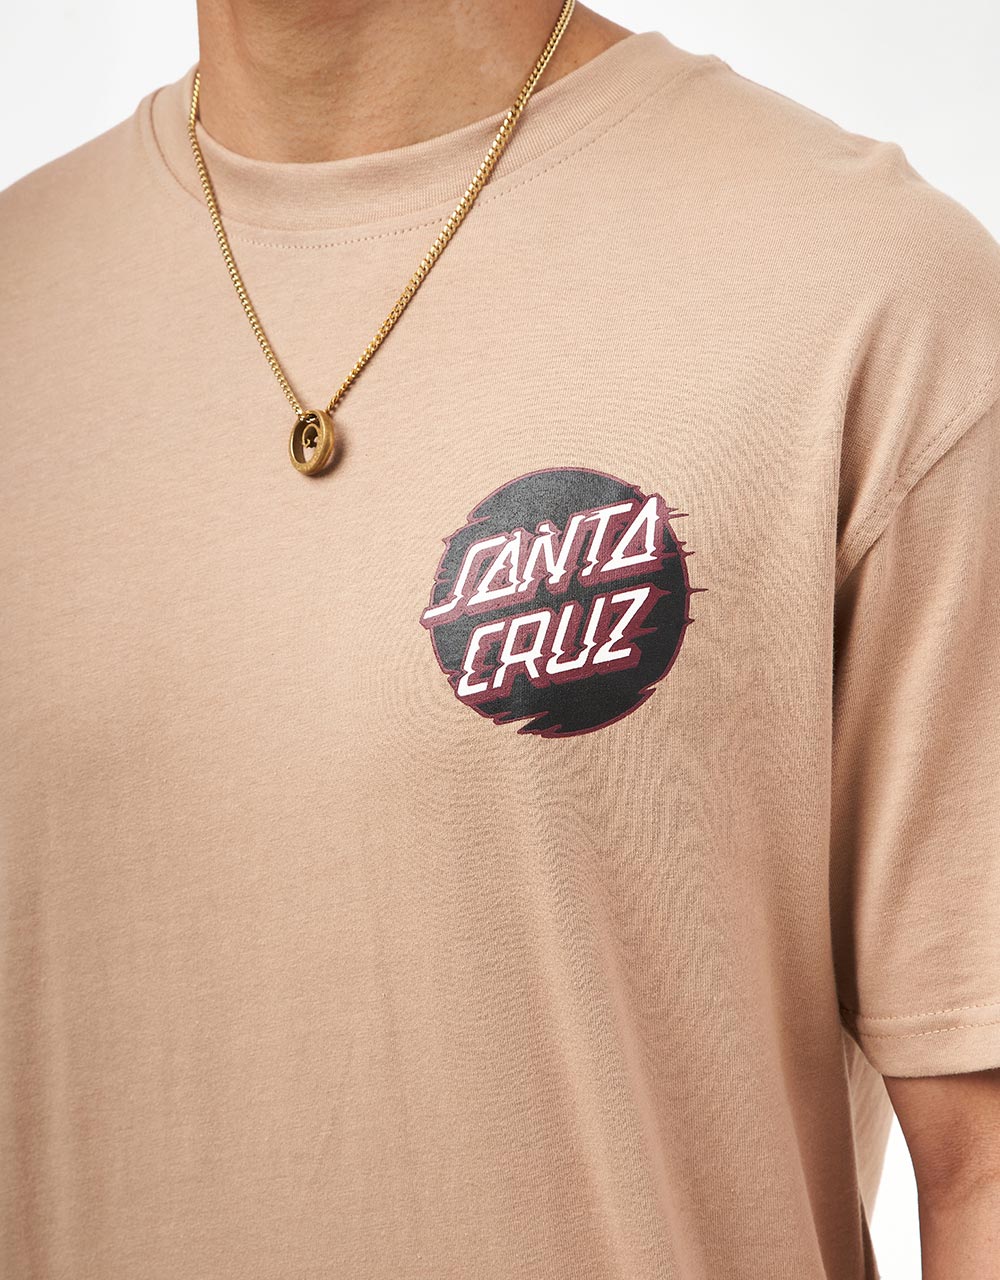 Santa Cruz Toxic Skull T-Shirt - Taupe